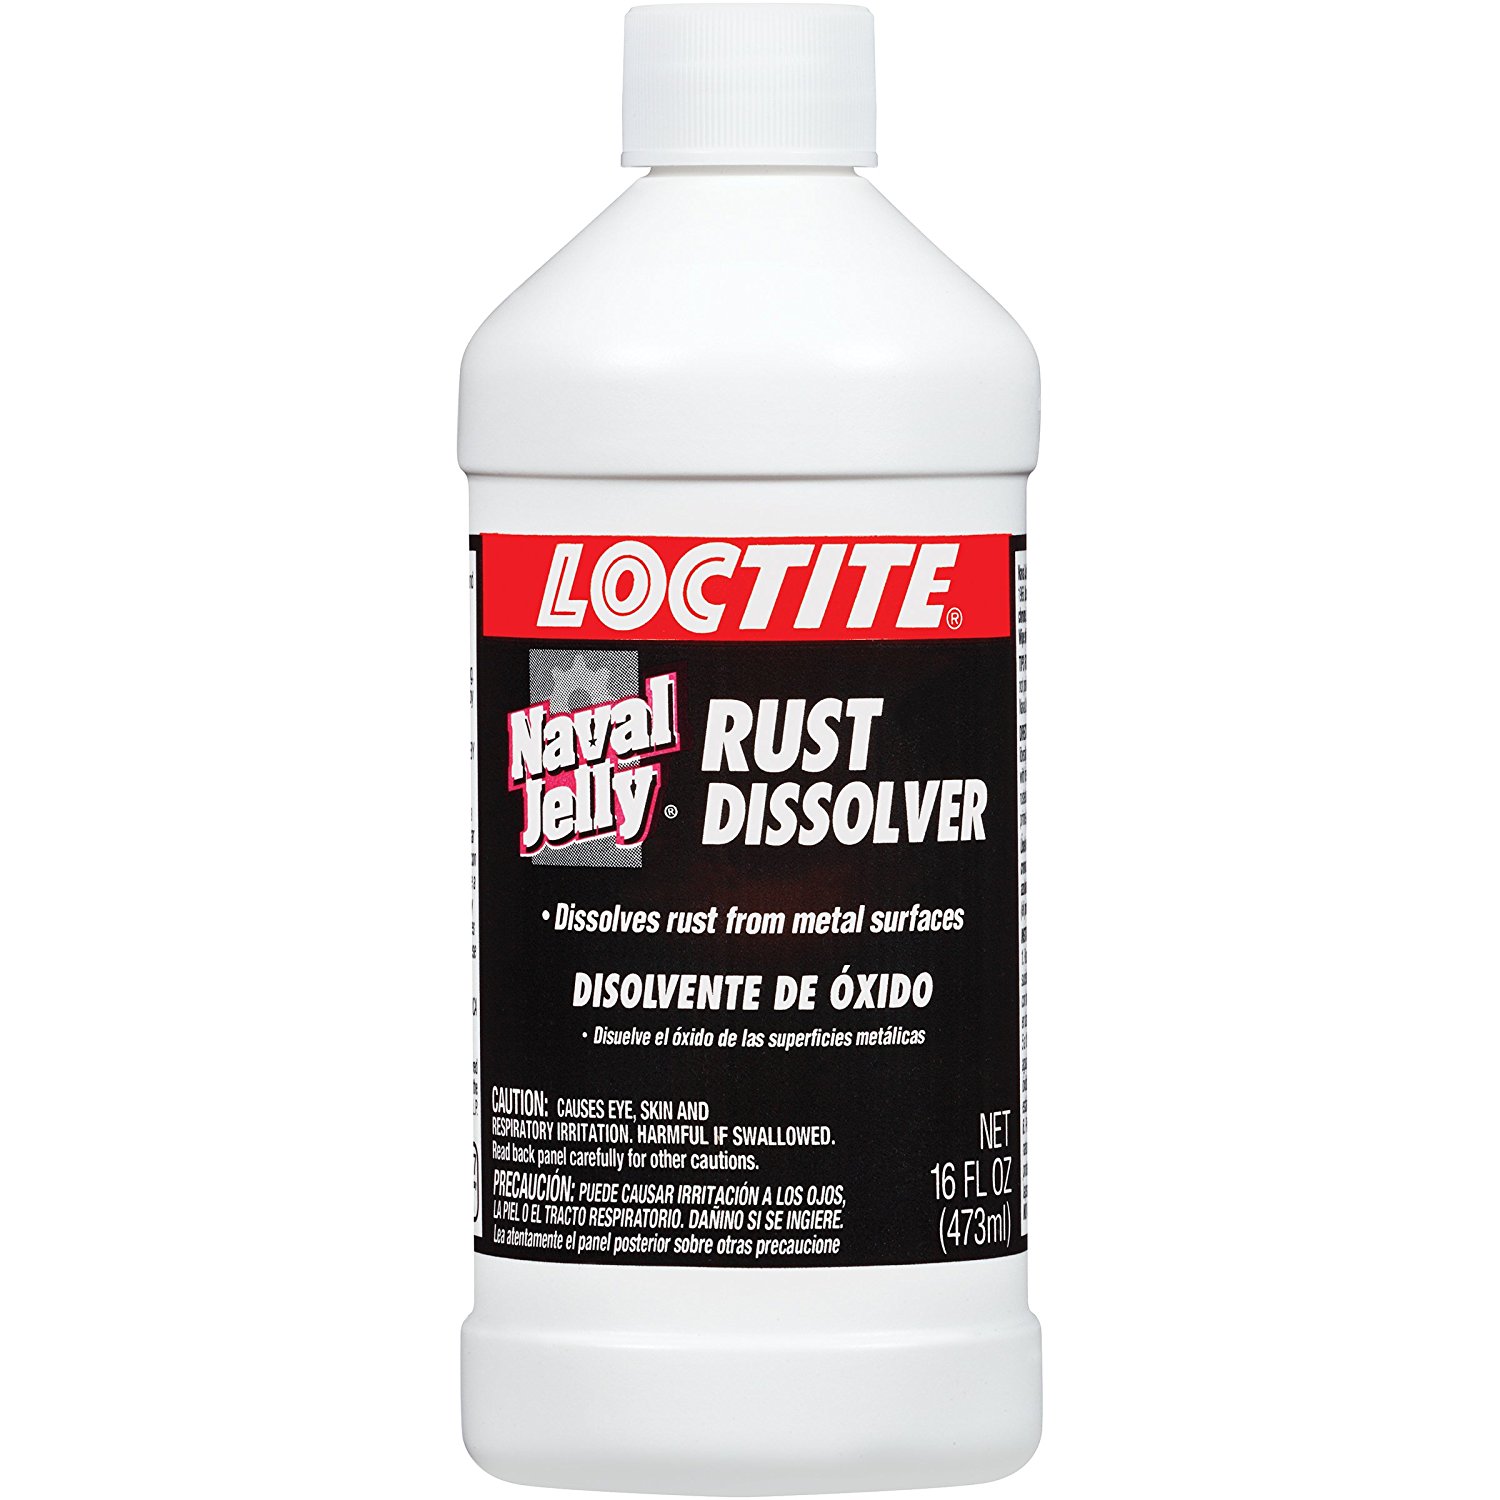 8. Loctite Naval Jelly Rust Dissolver